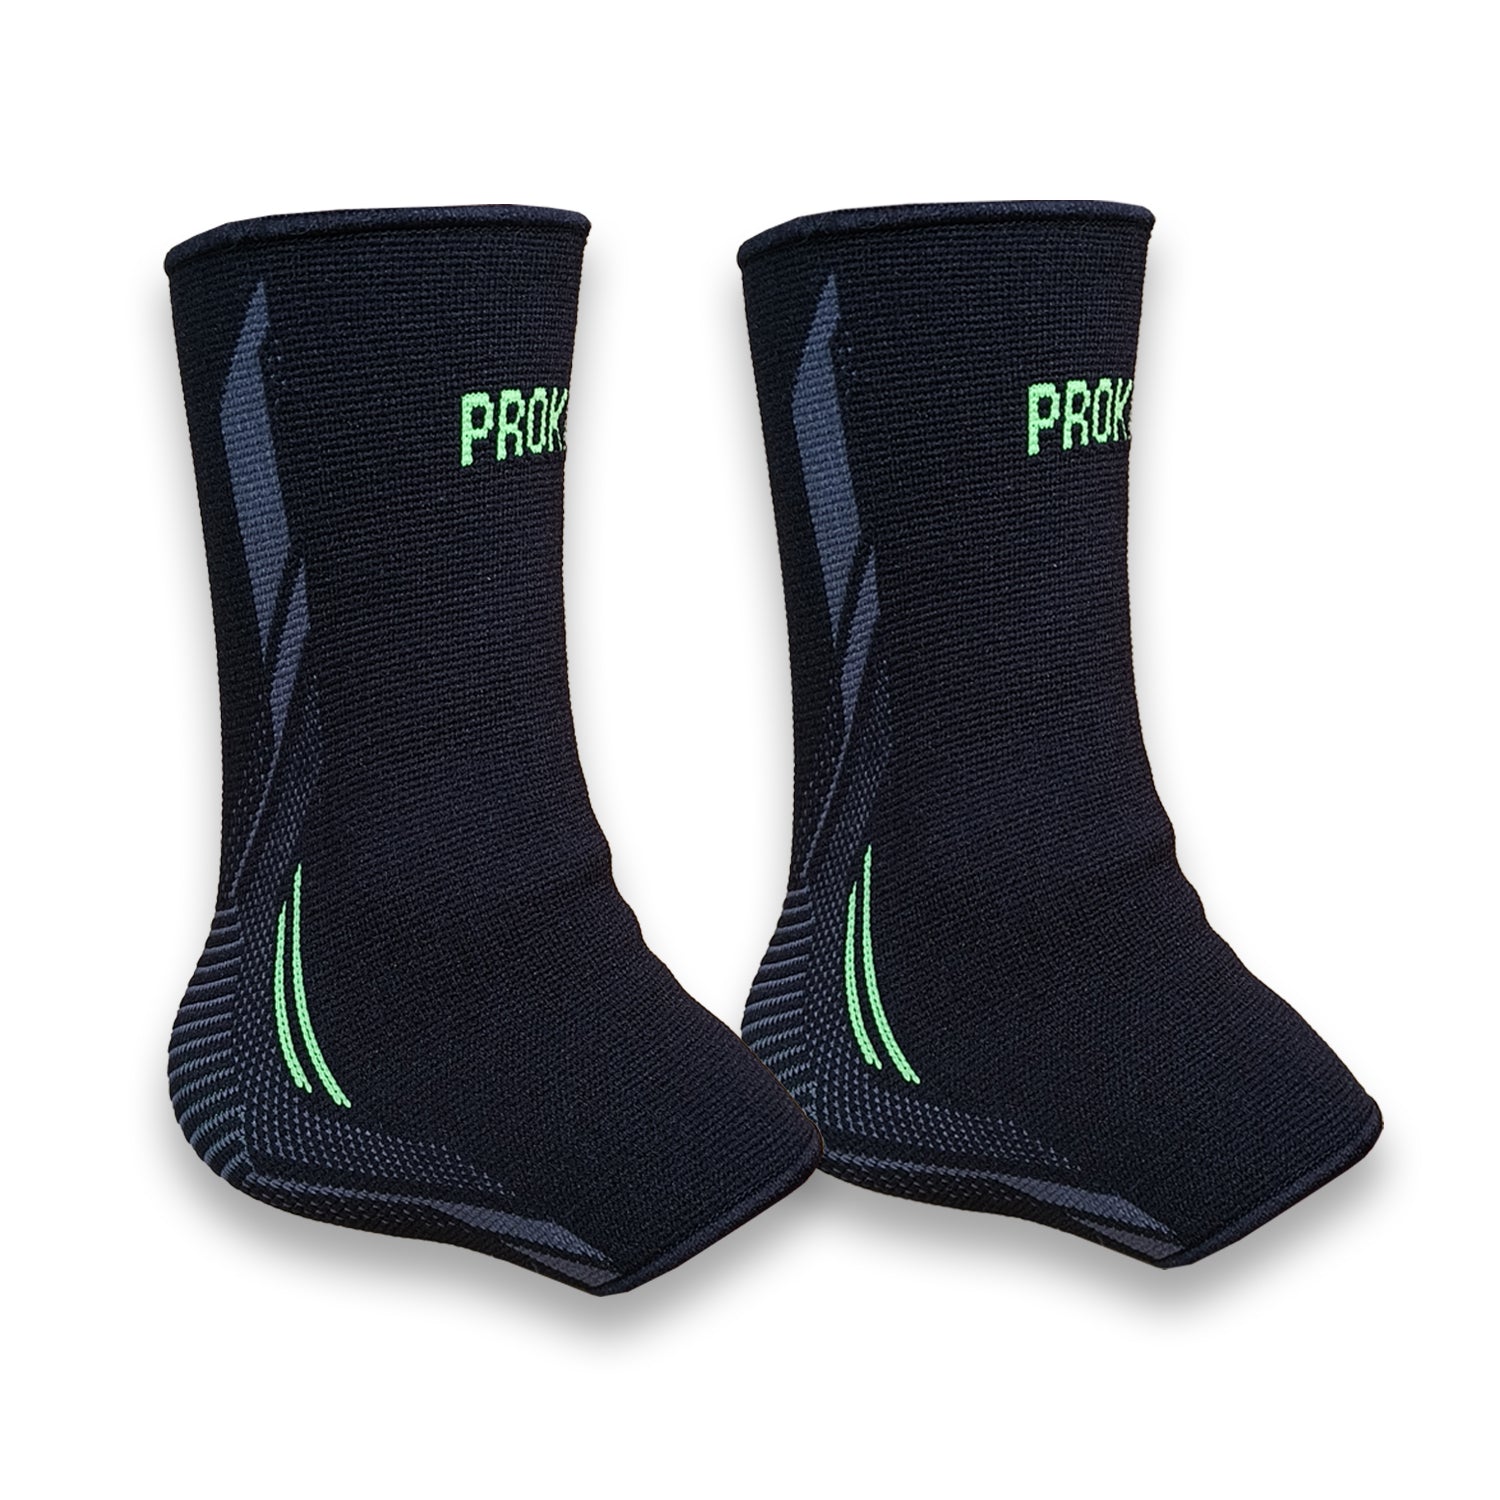 Prokick FlexiGrip Ankle Support, 1 Pair - Best Price online Prokicksports.com